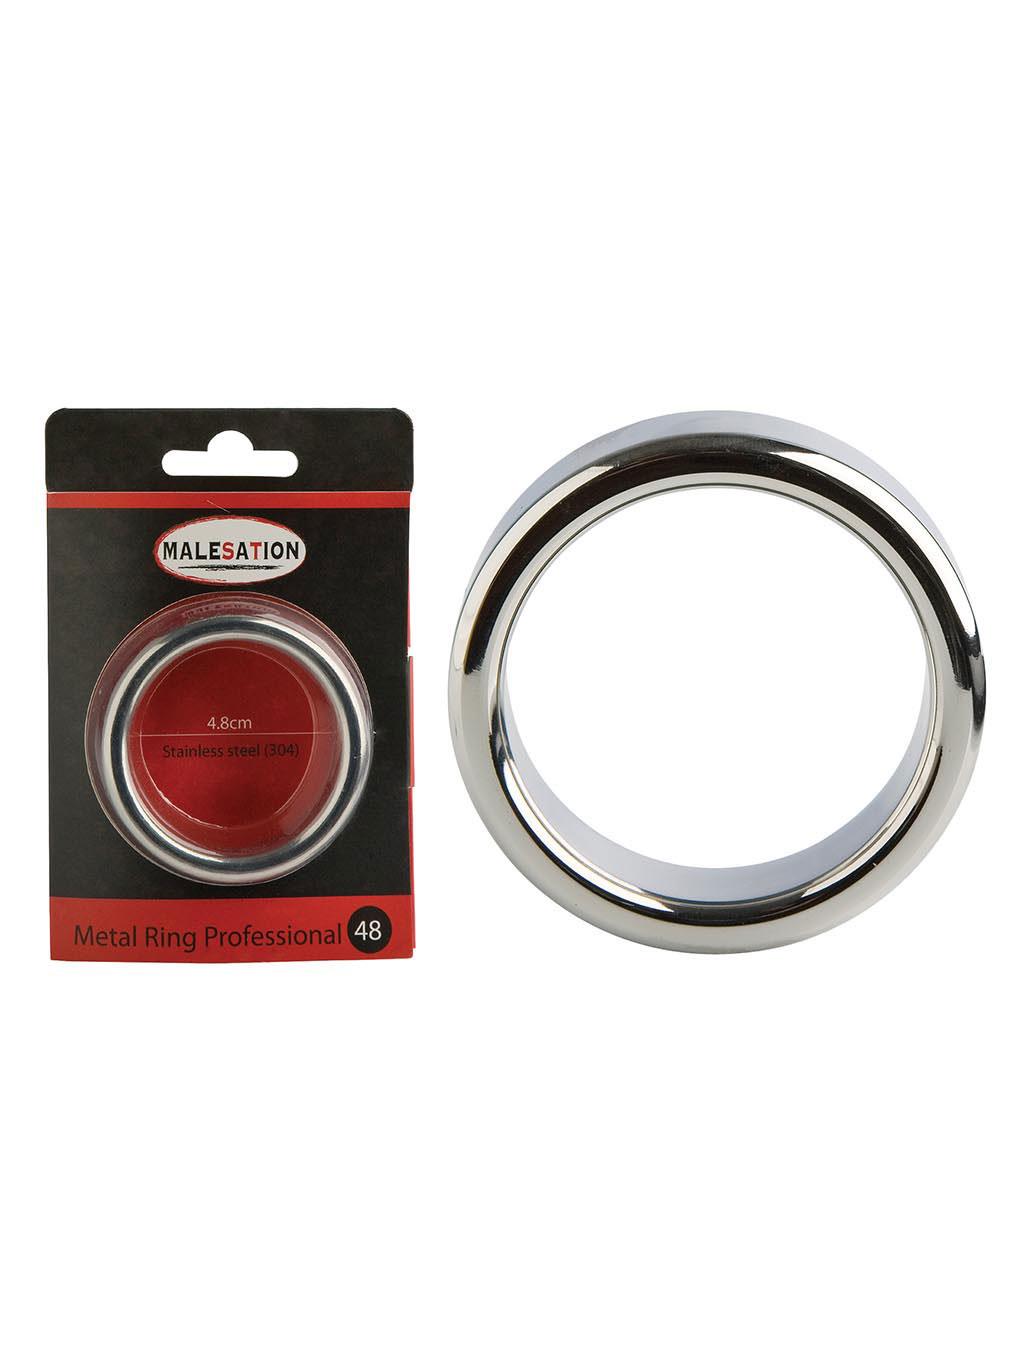 Malesation Metal Ring Professional - 48mm